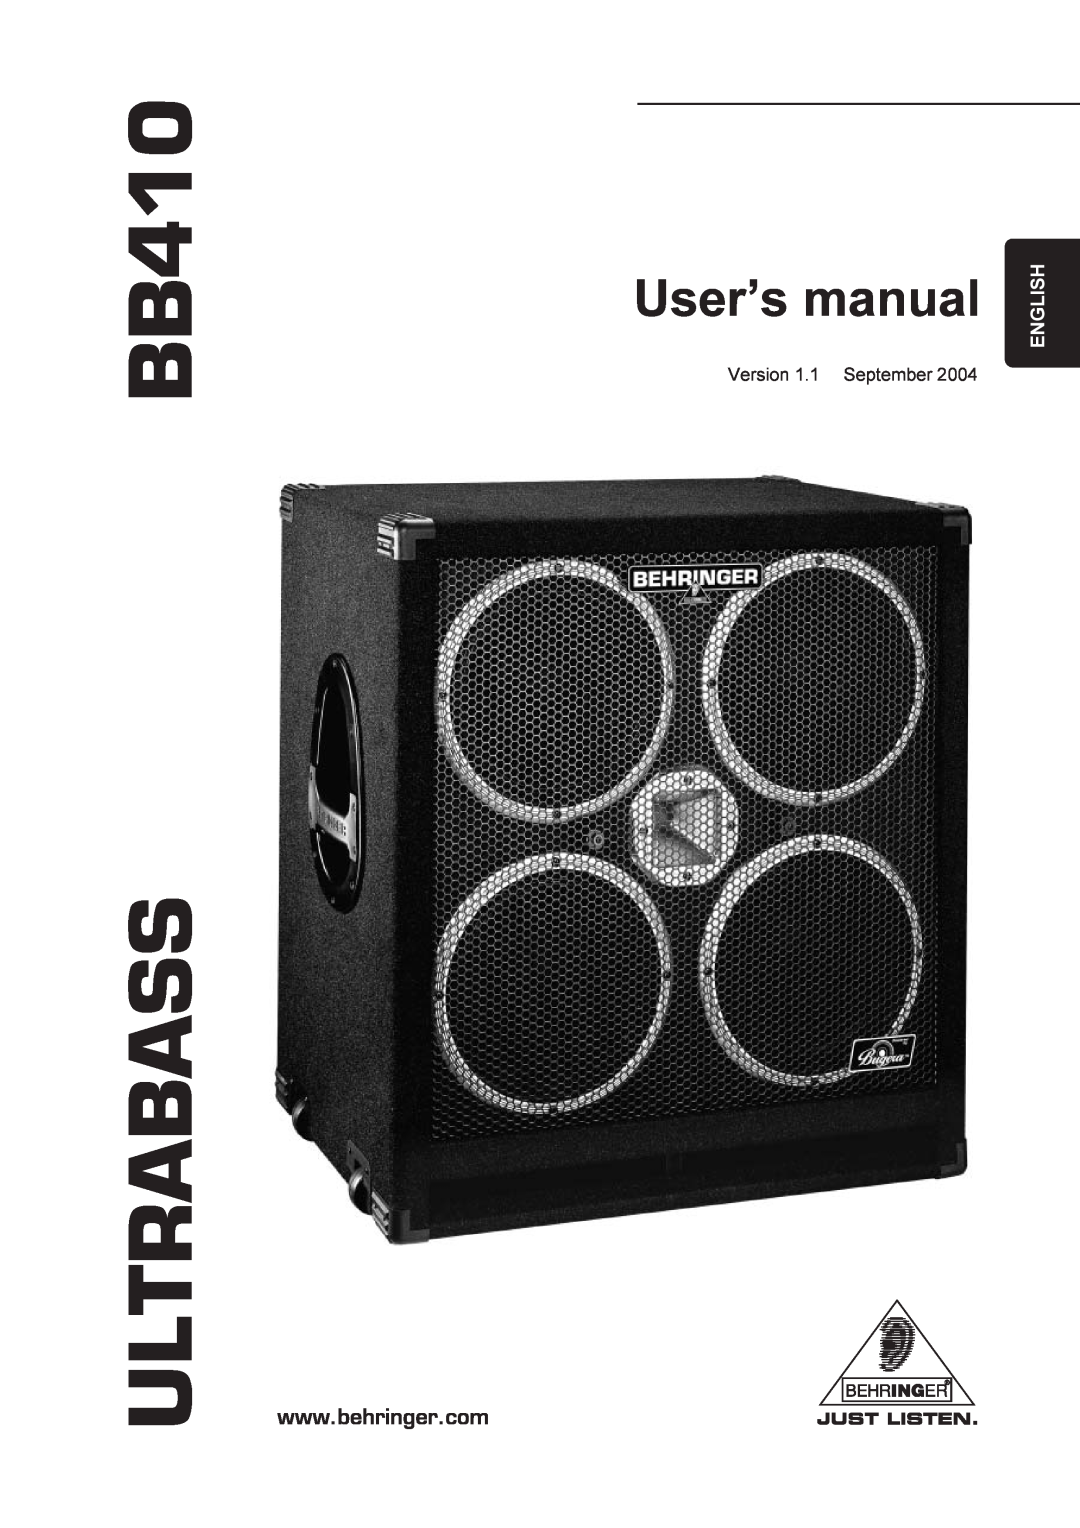 Behringer manual BB410 ULTRABASS, English 